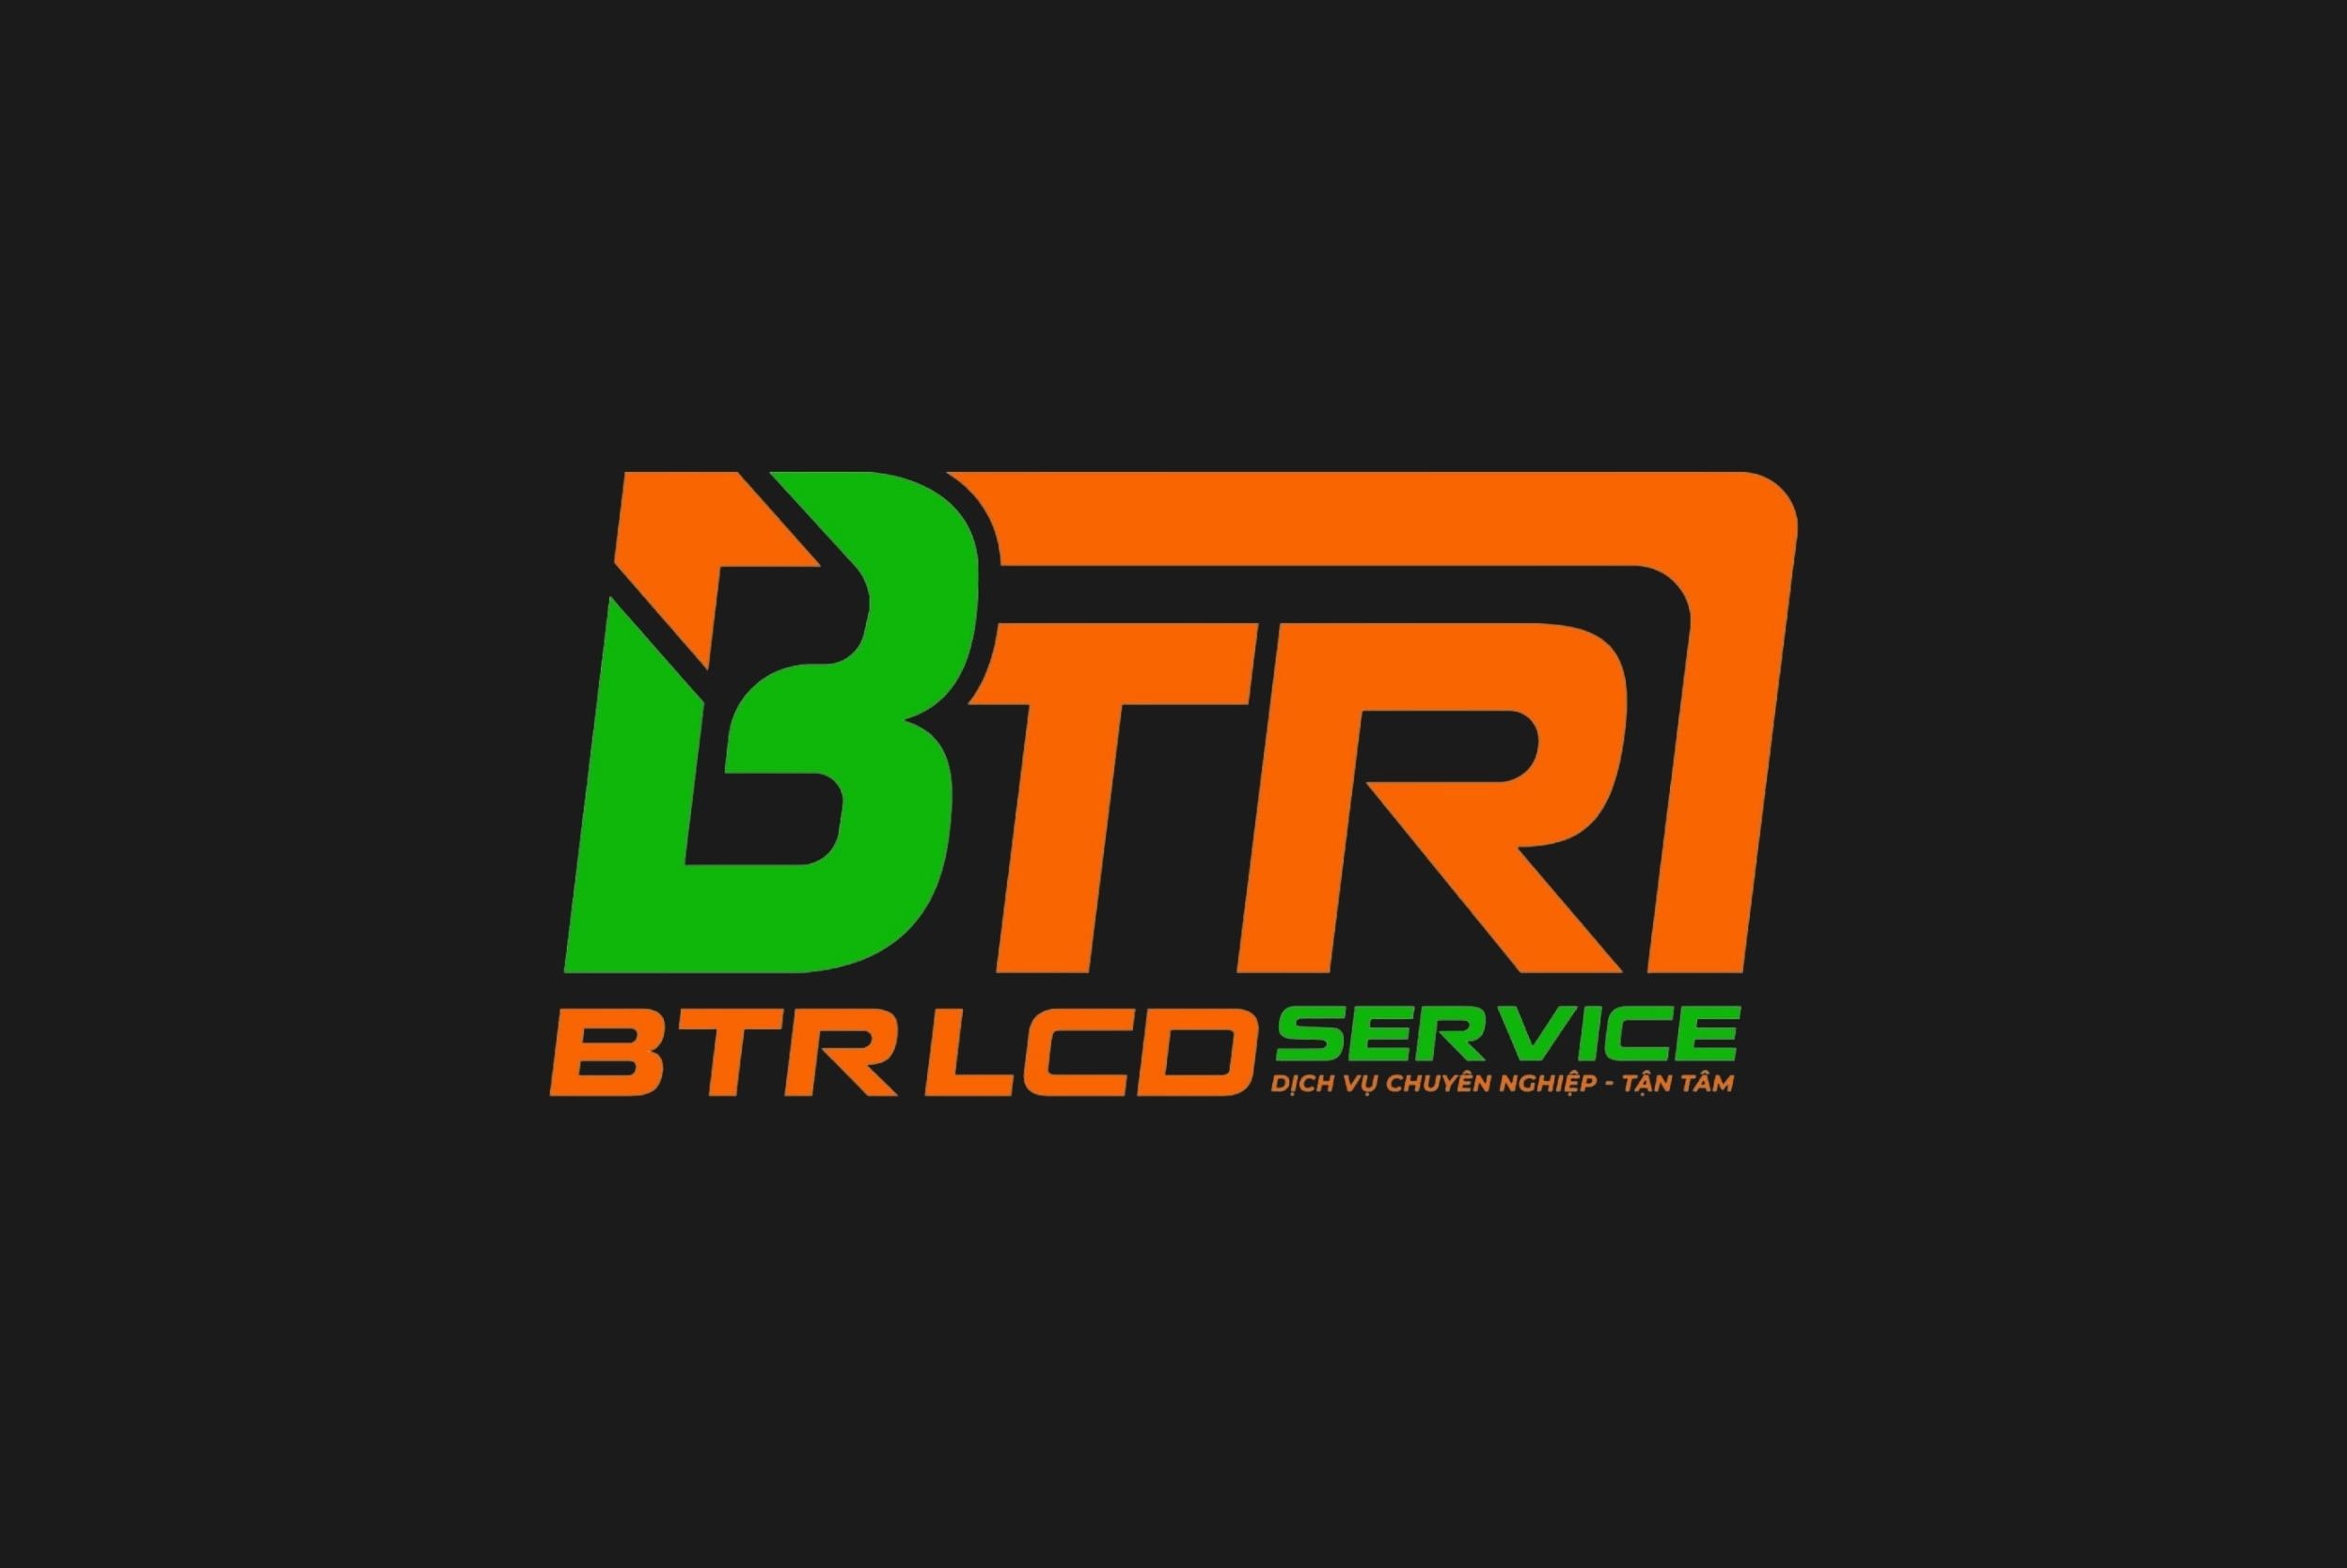 btr-lcd-service-logo